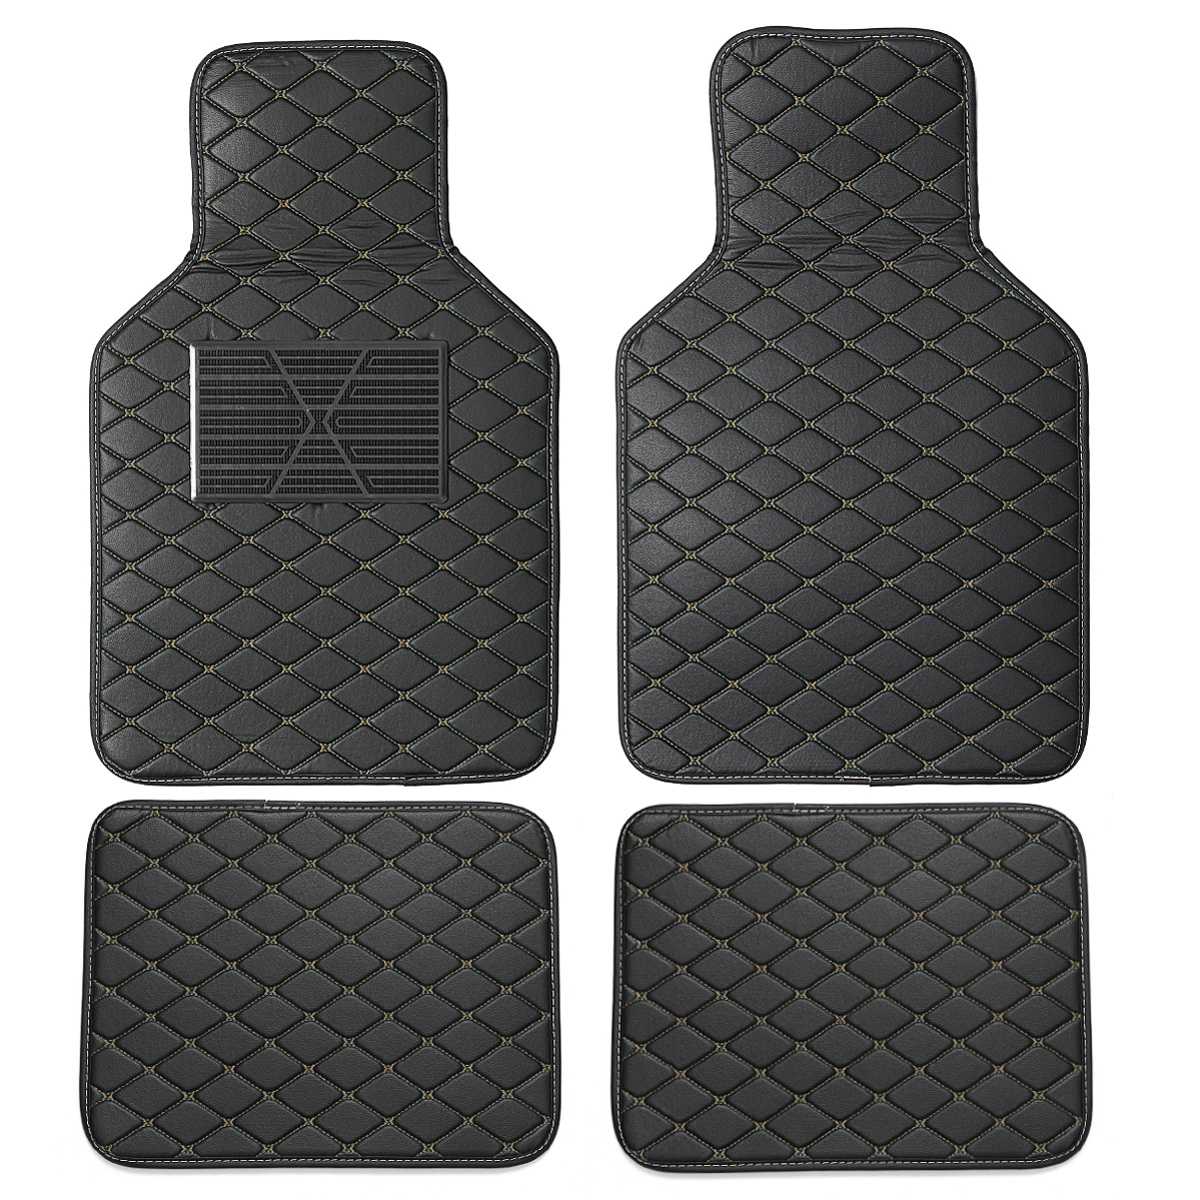 Universal Leather Front Rear Car Floor Mats Pad Car Carpet Mats Waterproof Anti-dirty Anti-slip Floor Mats For Most Cars Black - Auto GoShop